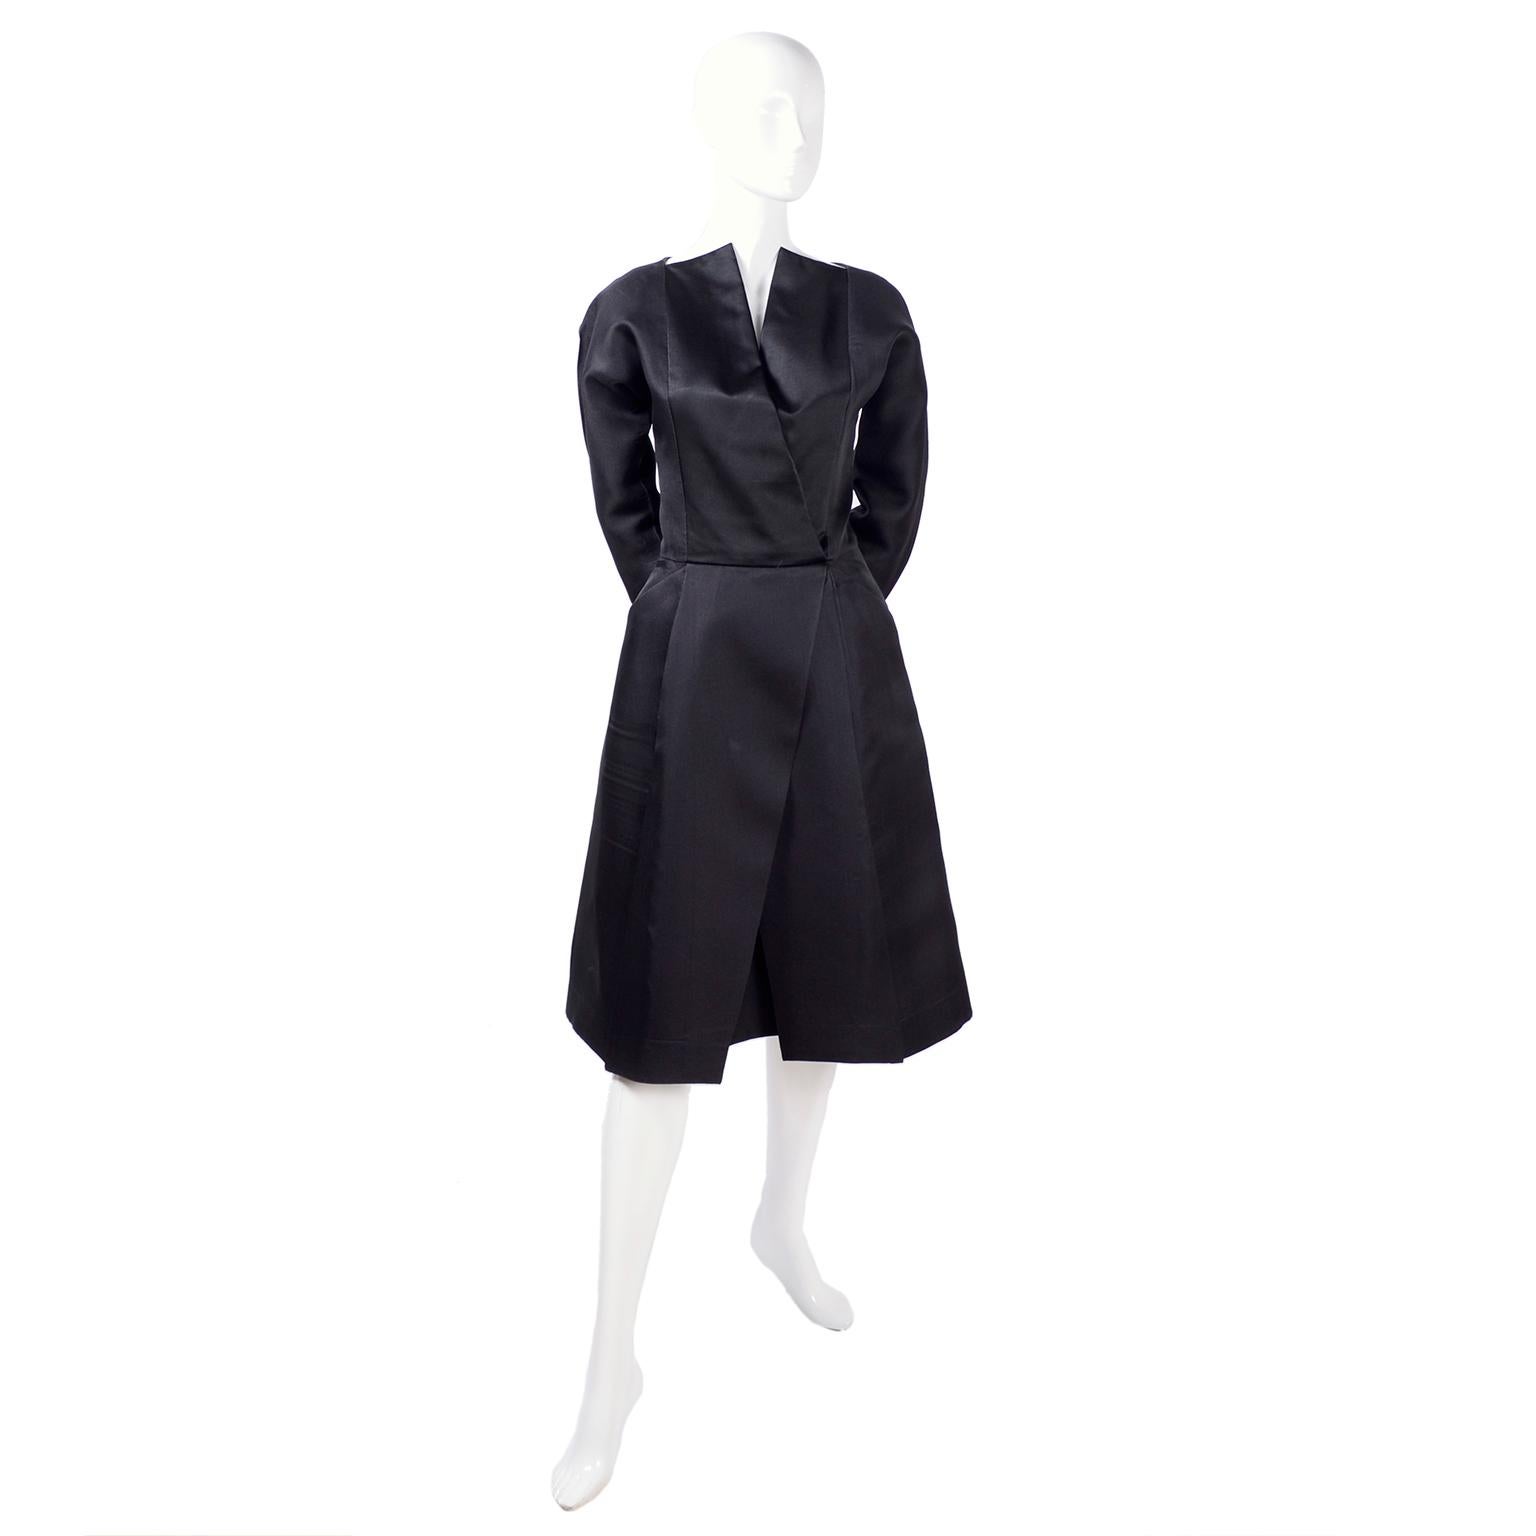 Vintage Black Geoffrey Beene Dress W/ Detailed Origami Folds & Styling 5